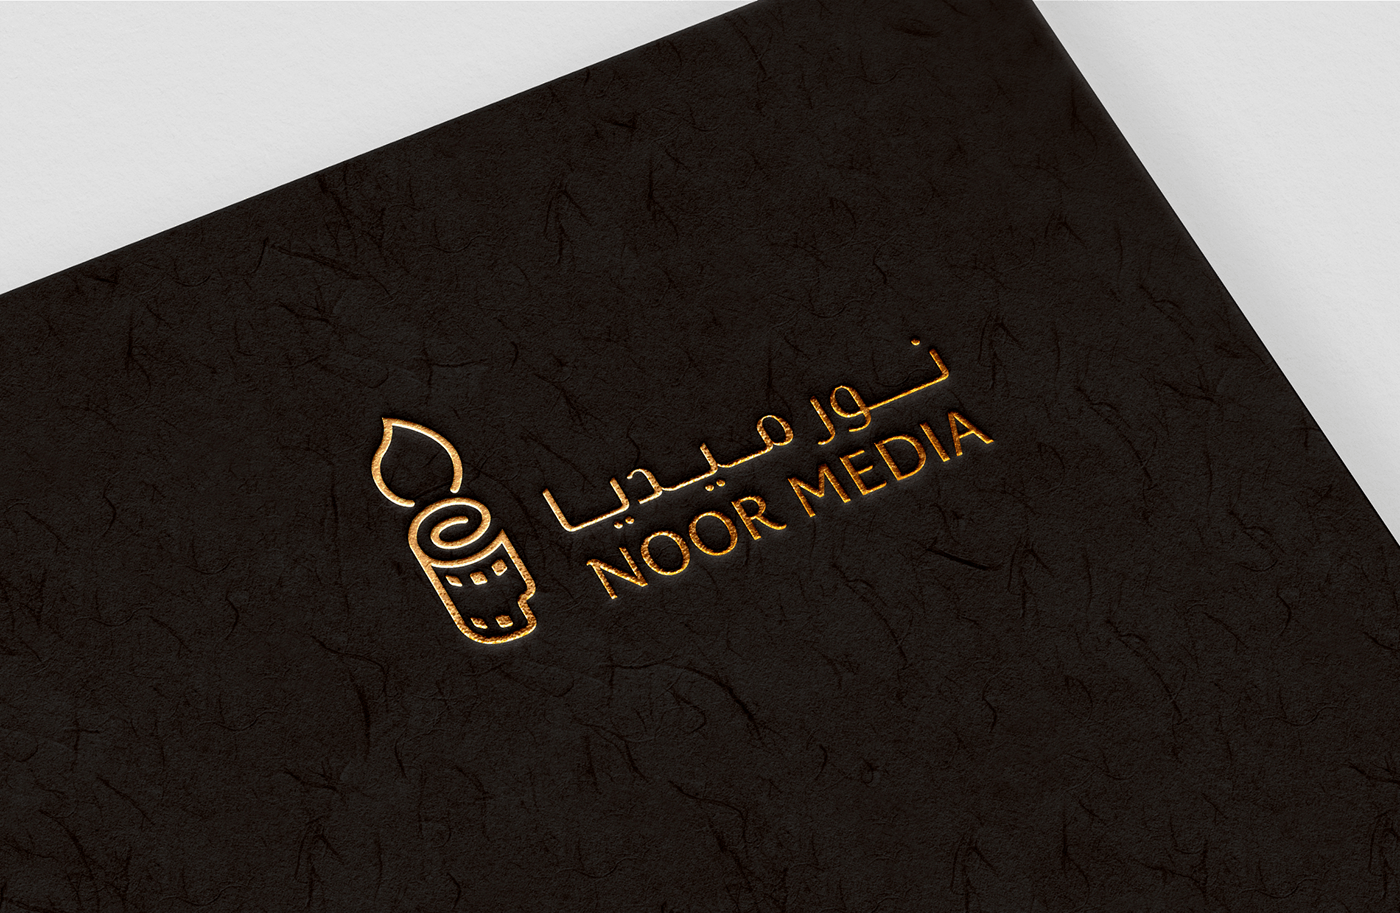 agency brand branding  identity logo logodesign media noor Production